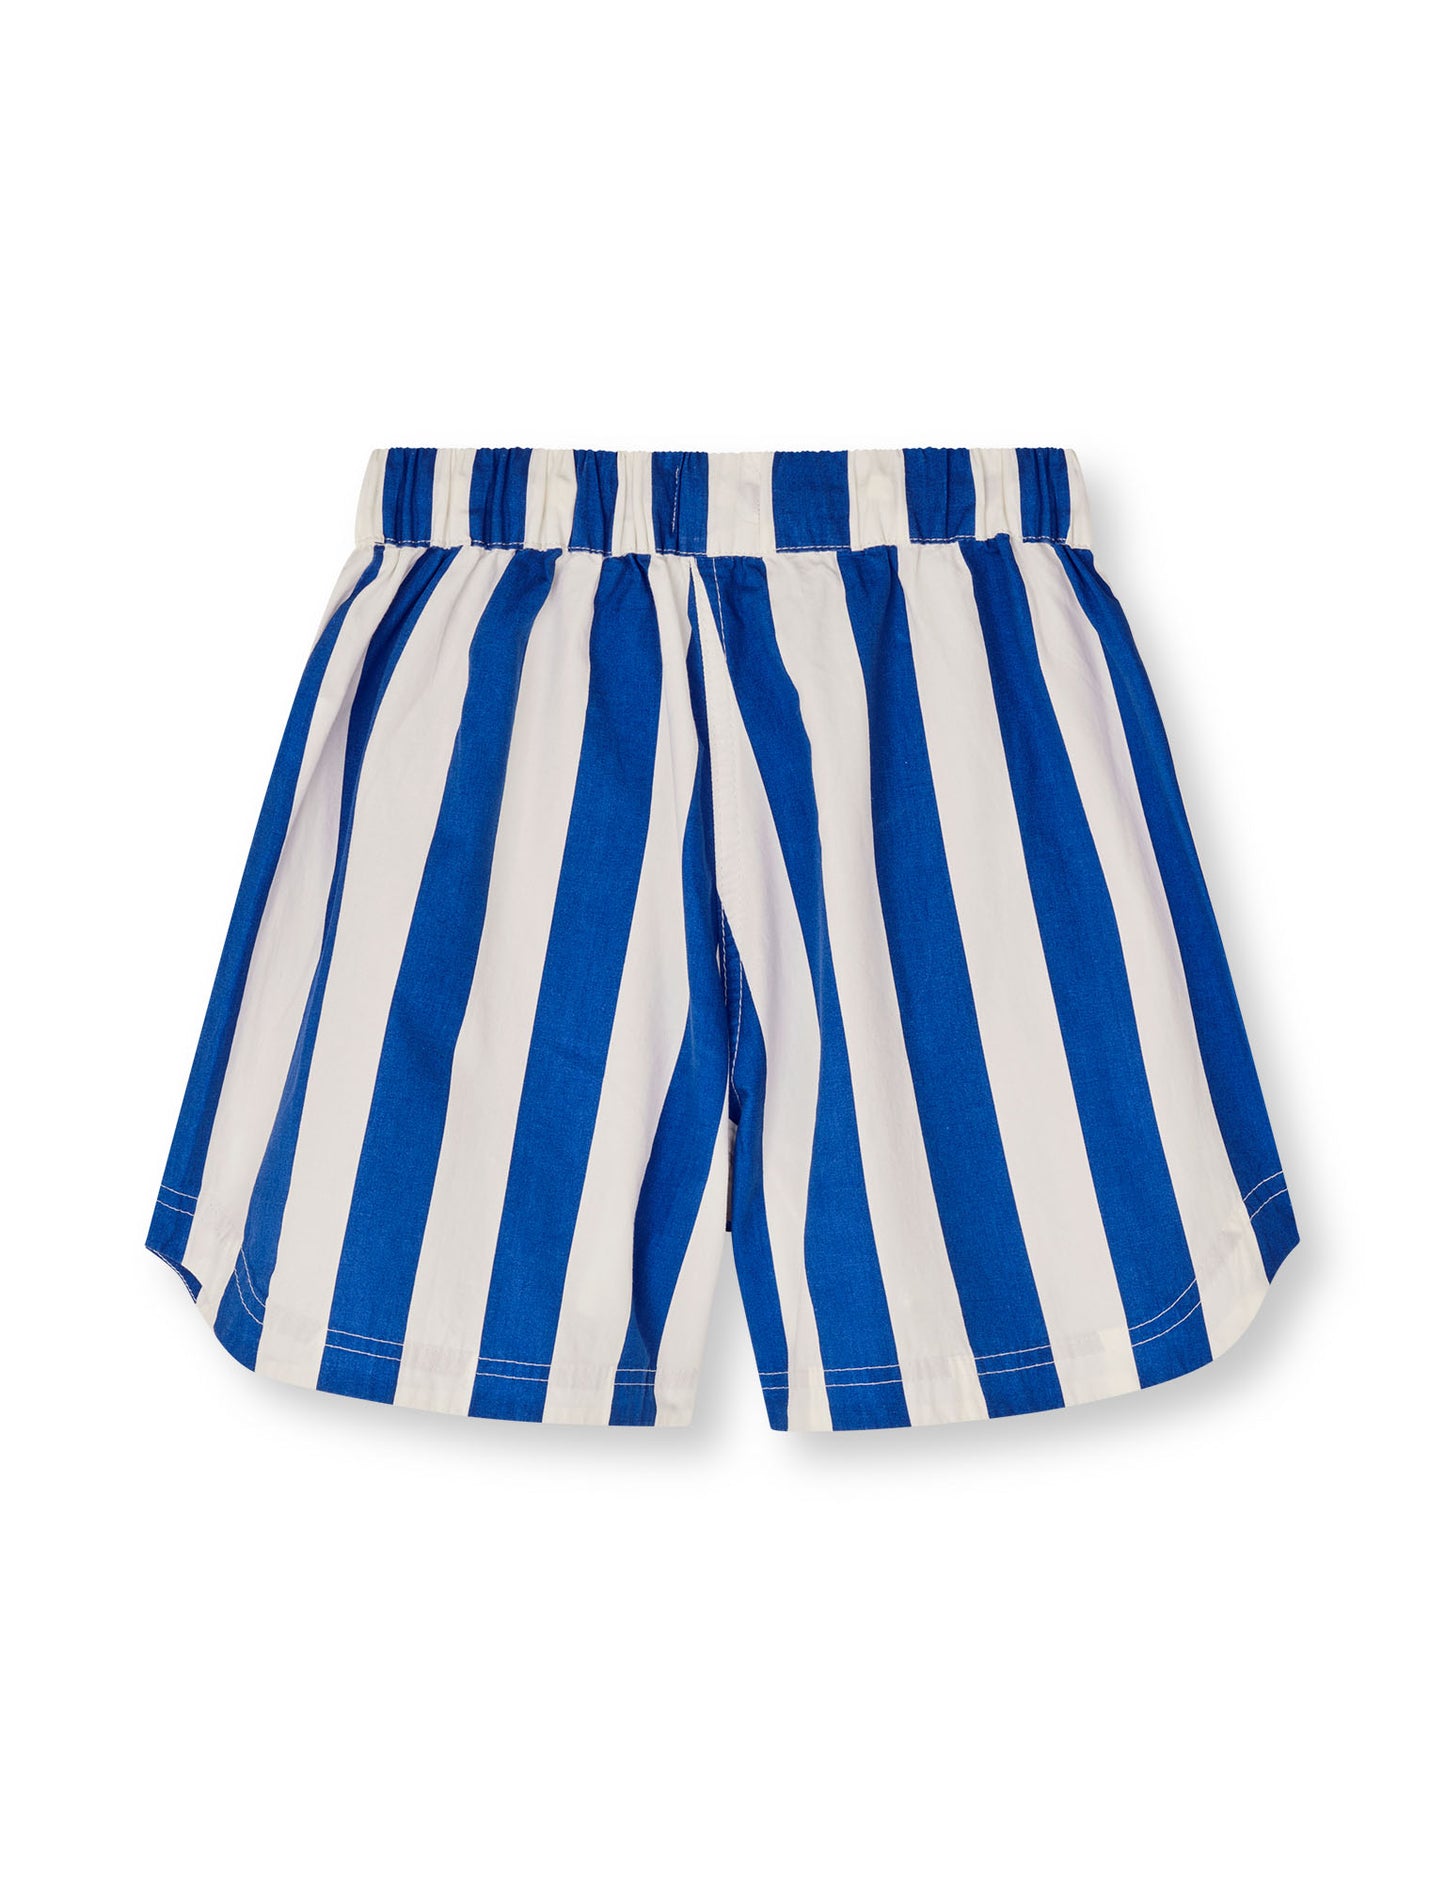 Sacky Pio Shorts, Dazzling Blue/White Alyssum